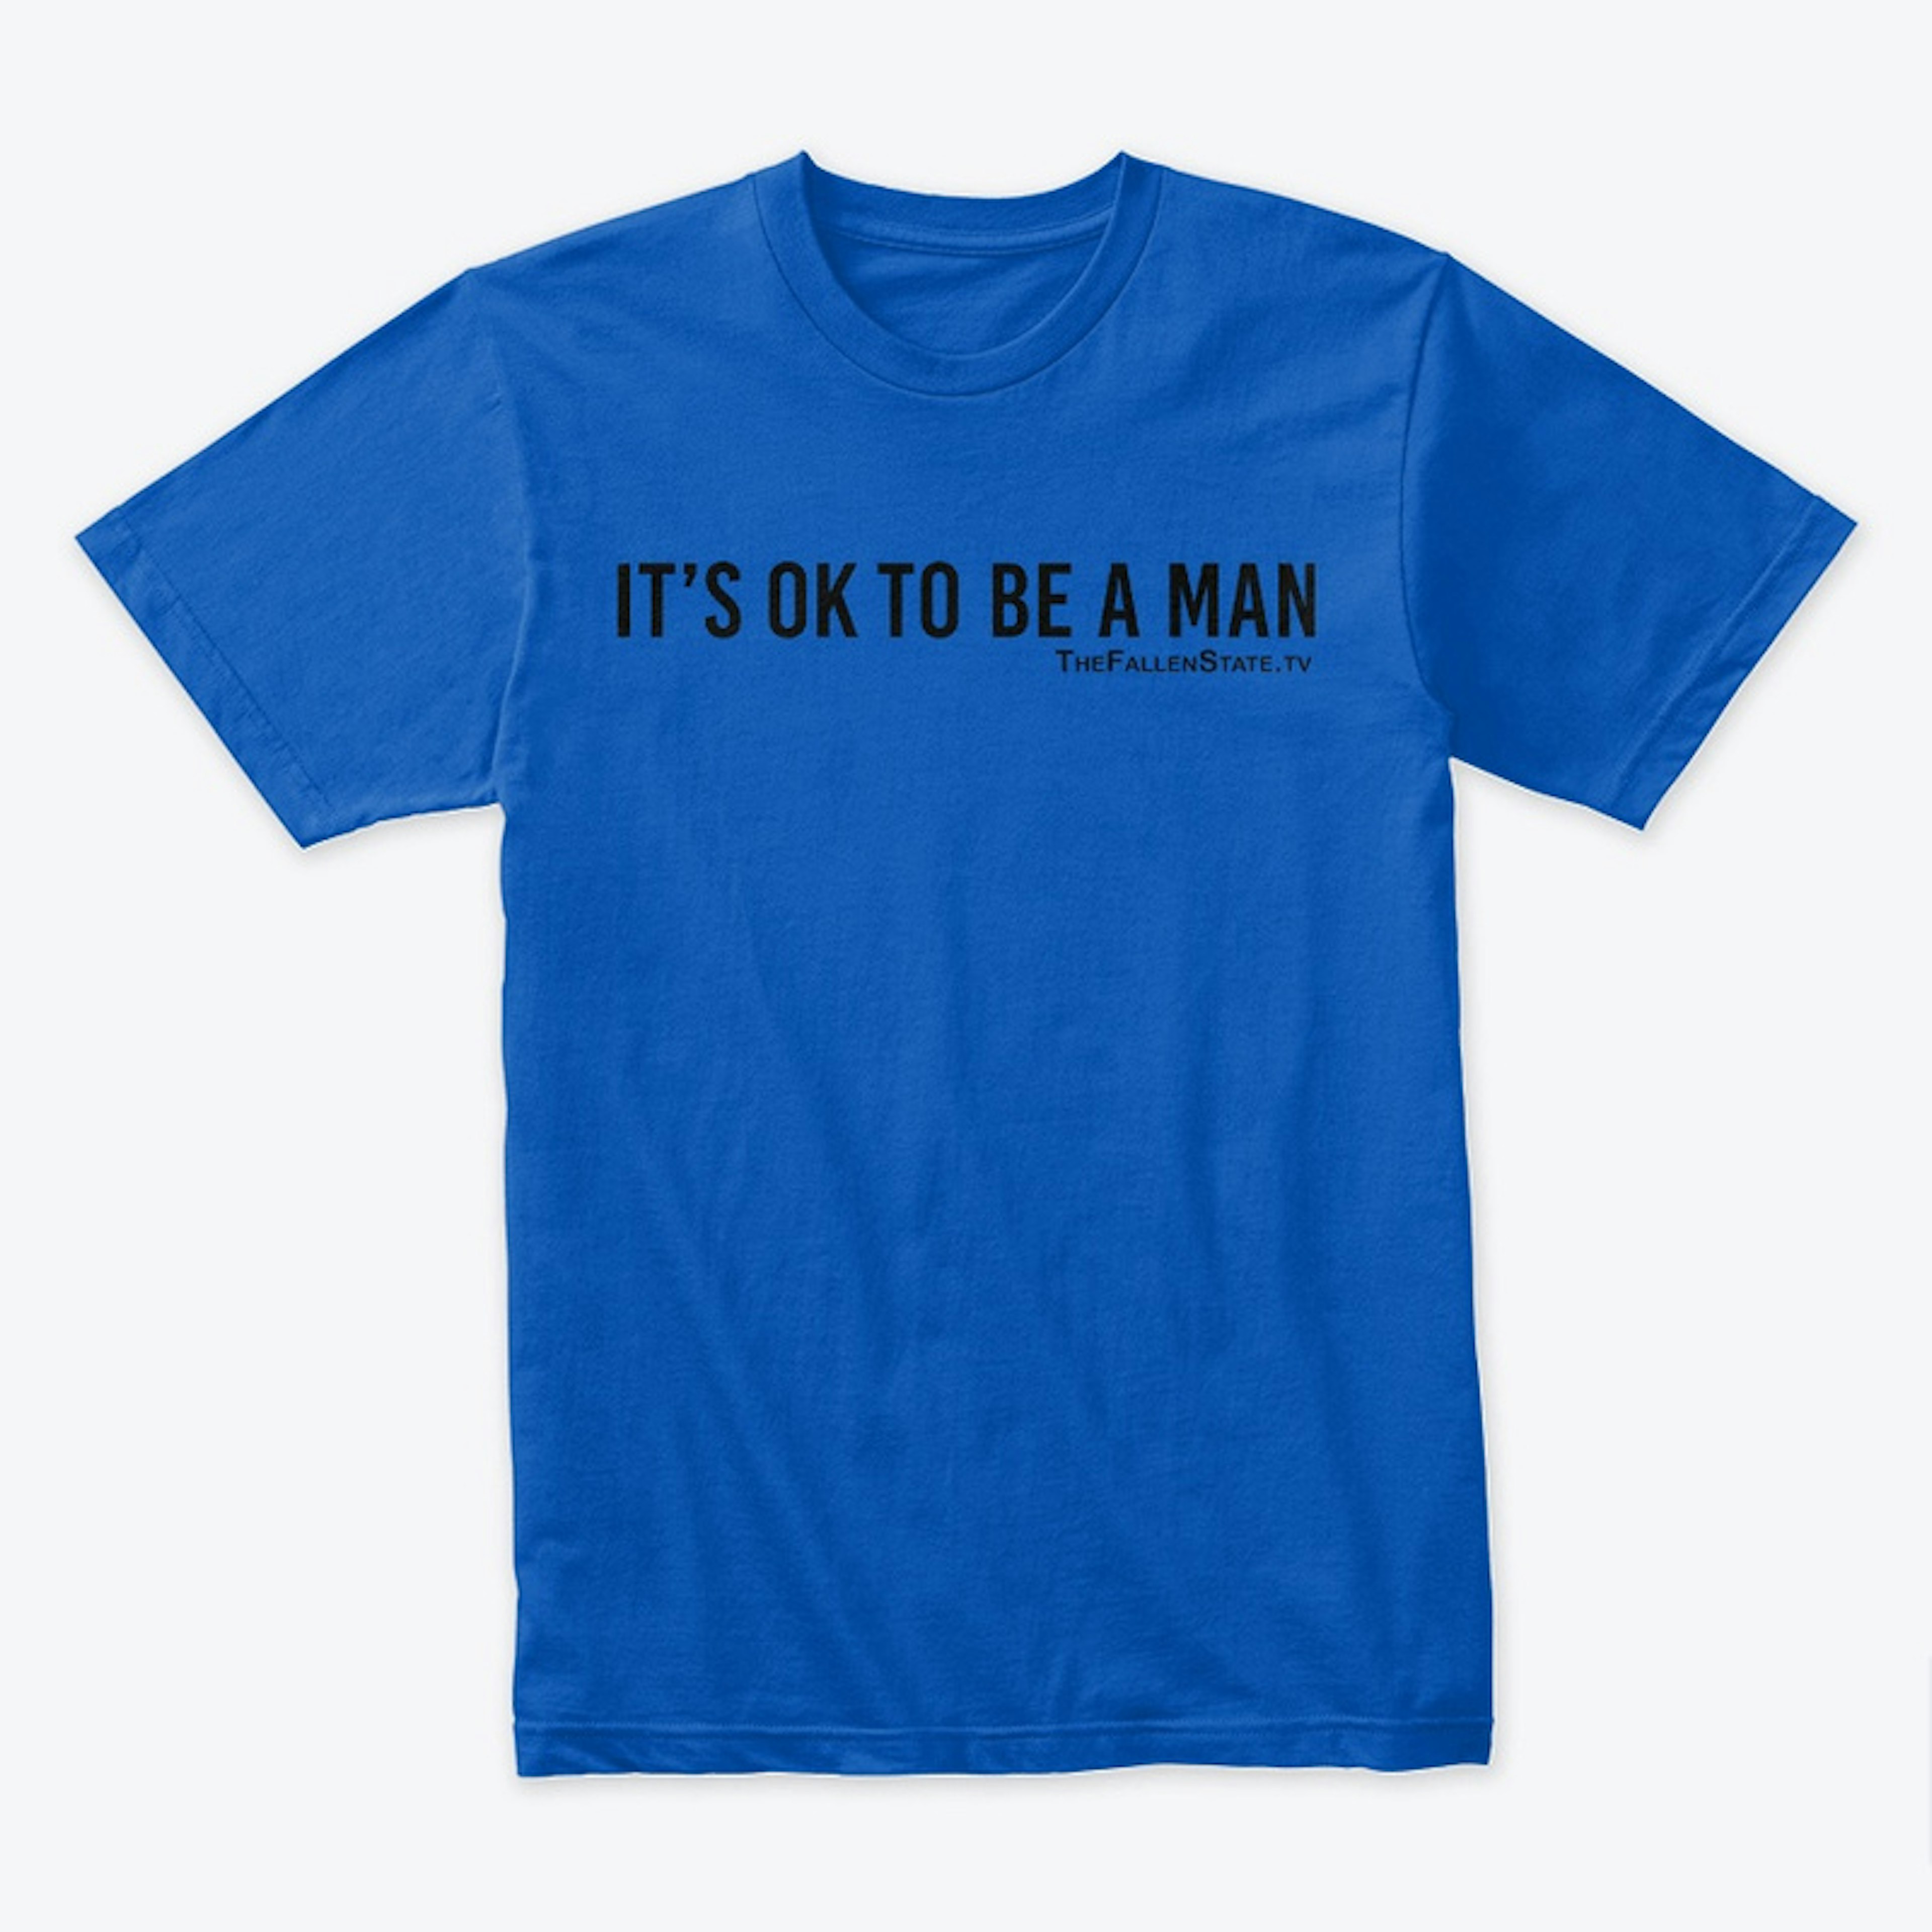 IT'S OK TO BE A MAN T-Shirt (Black Logo)